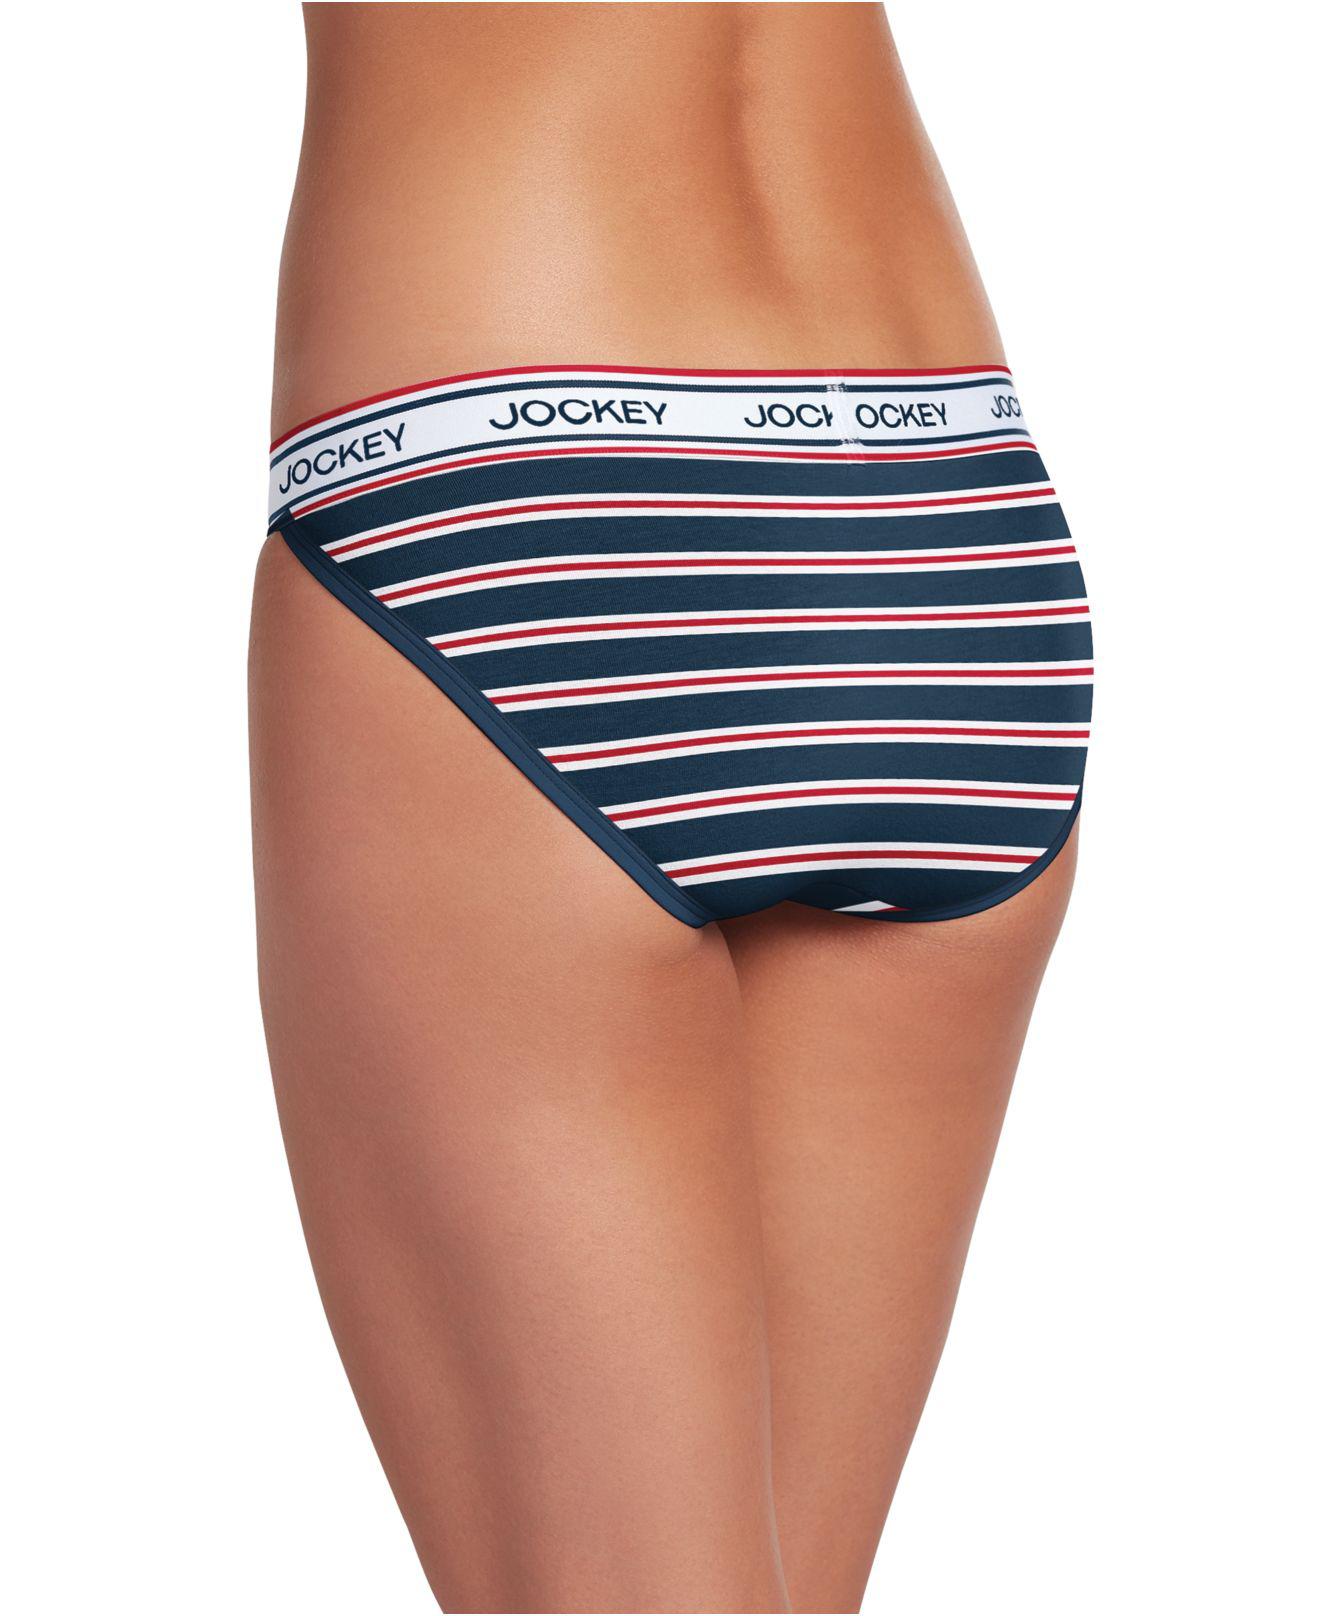 https://cdna.lystit.com/photos/macys/0e6760ce/jockey-Victory-Stripe-Retro-Stripe-String-Bikini-2252-First-At-Macys-Also-Available-In-Extended-Sizes.jpeg